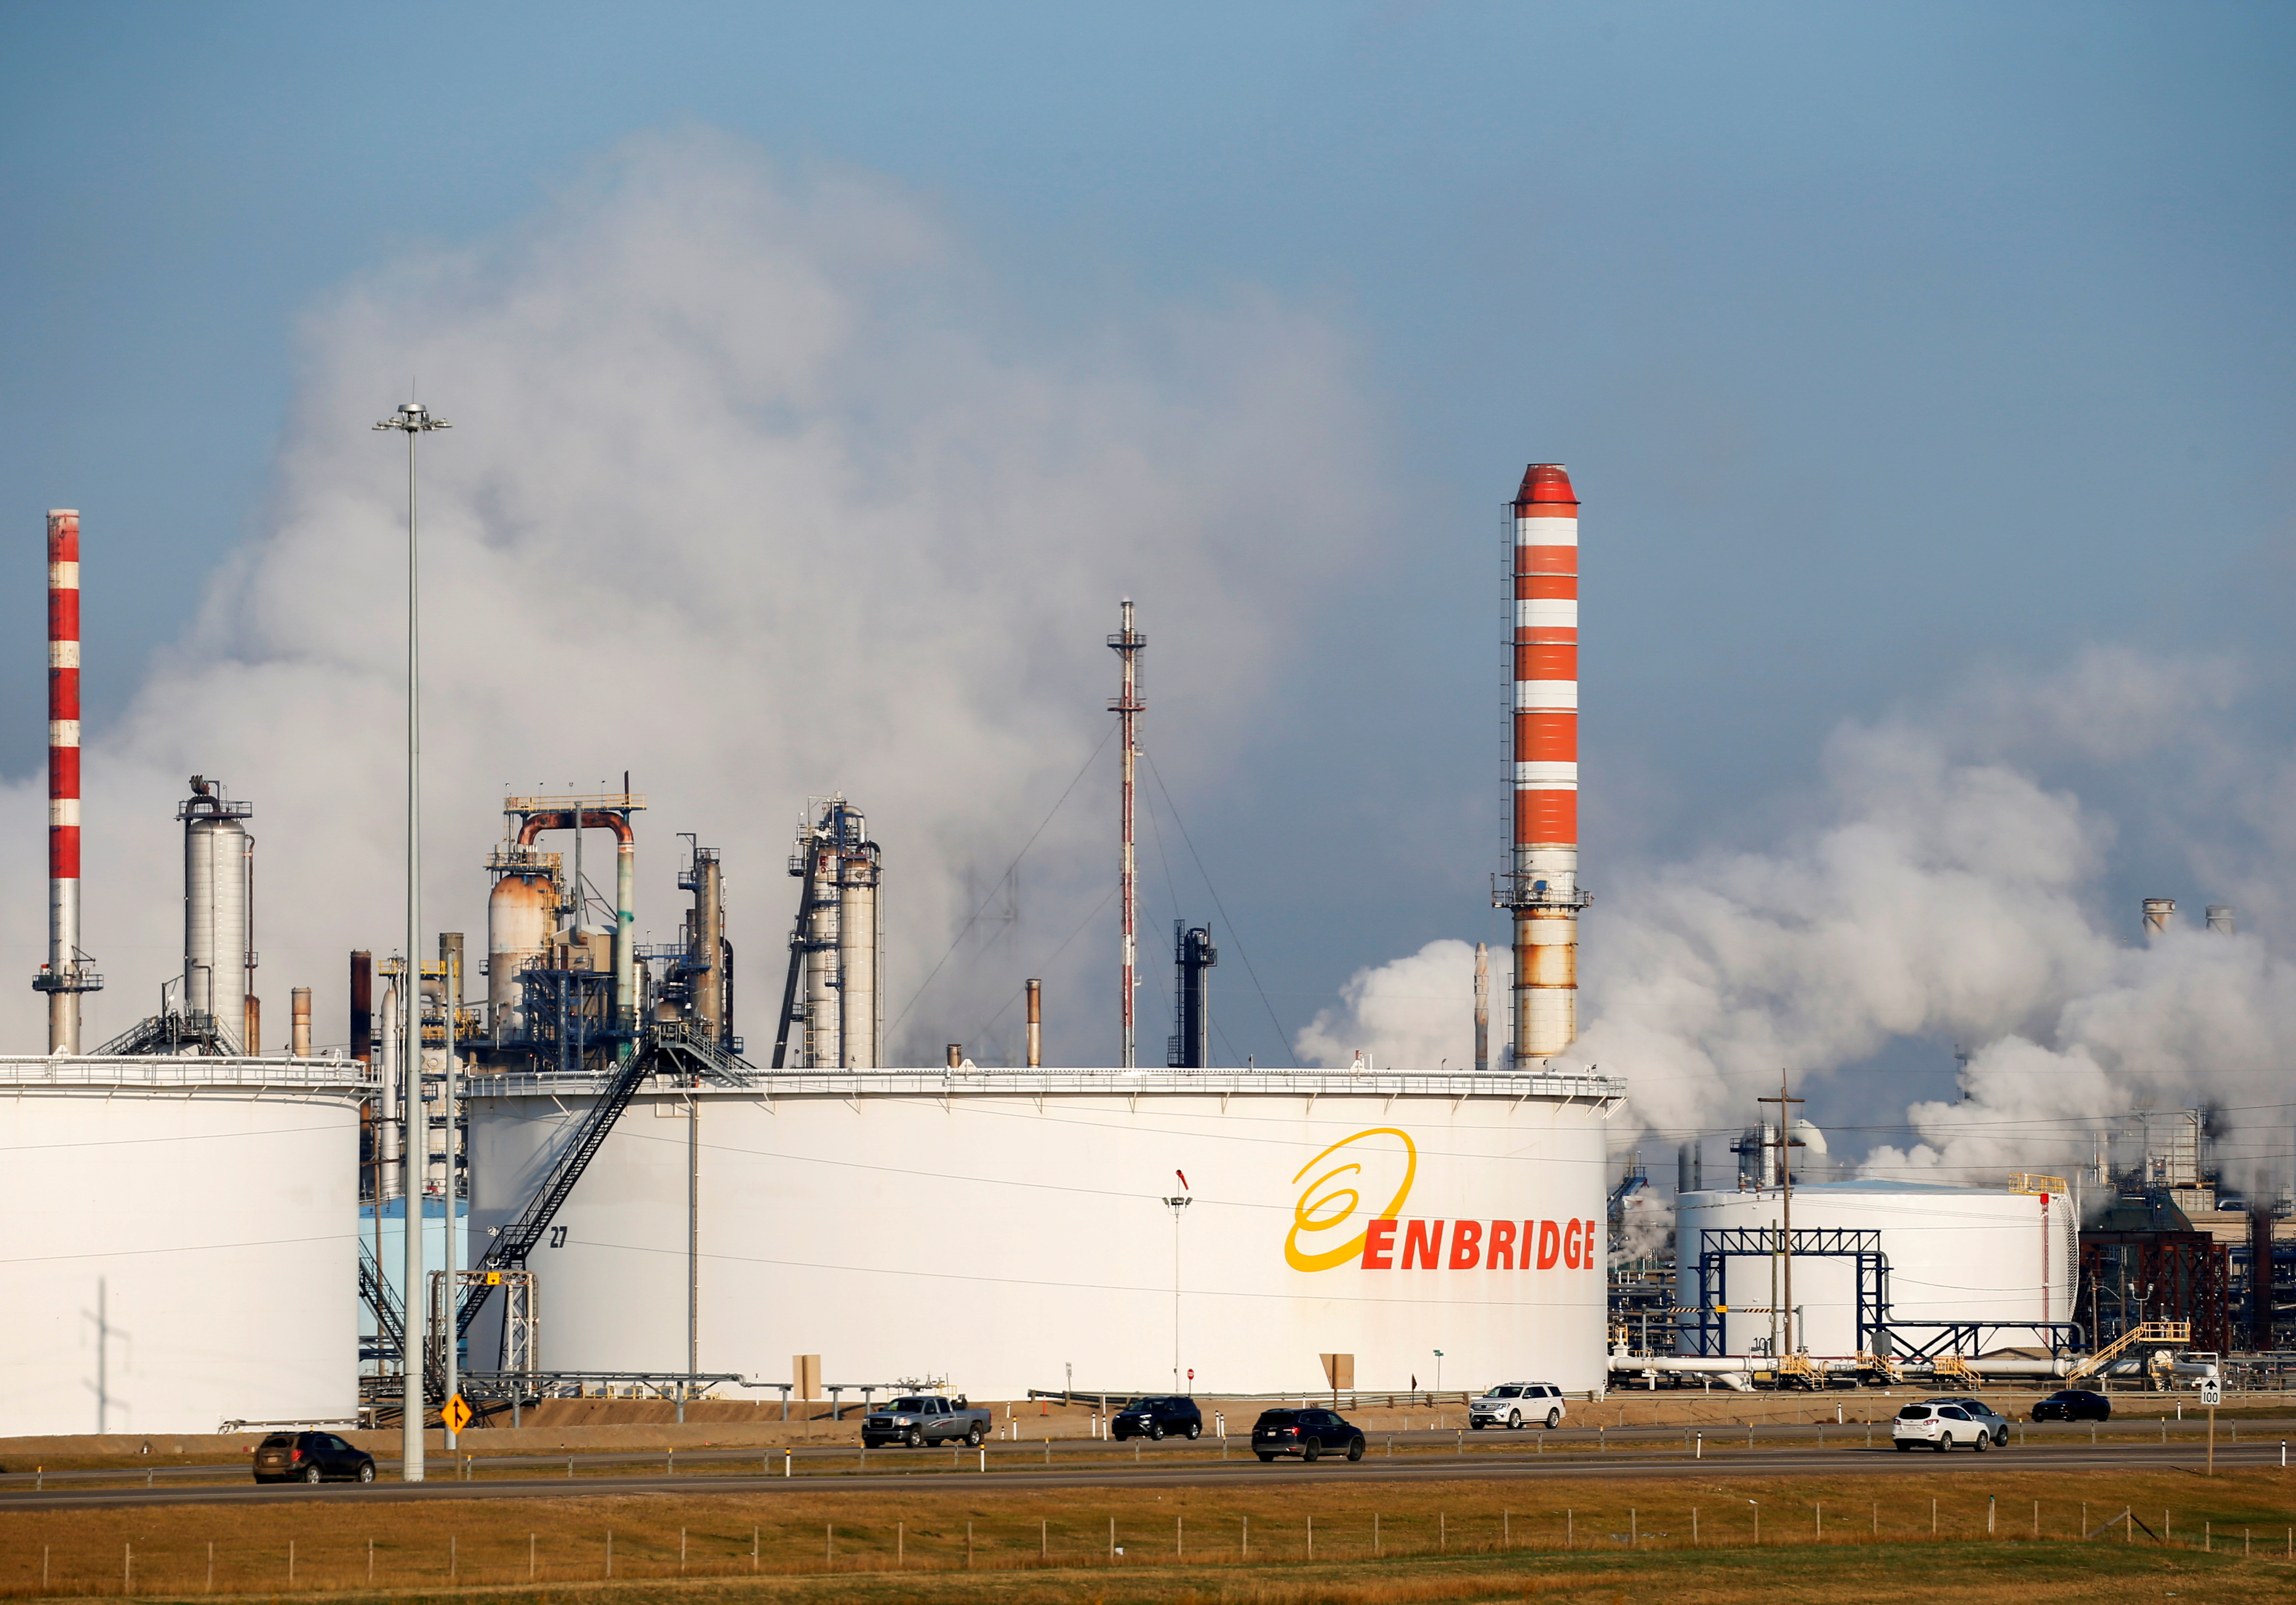 Petrochemical storage tanks are seen at the Enbridge Edmonton Terminal near Edmonton